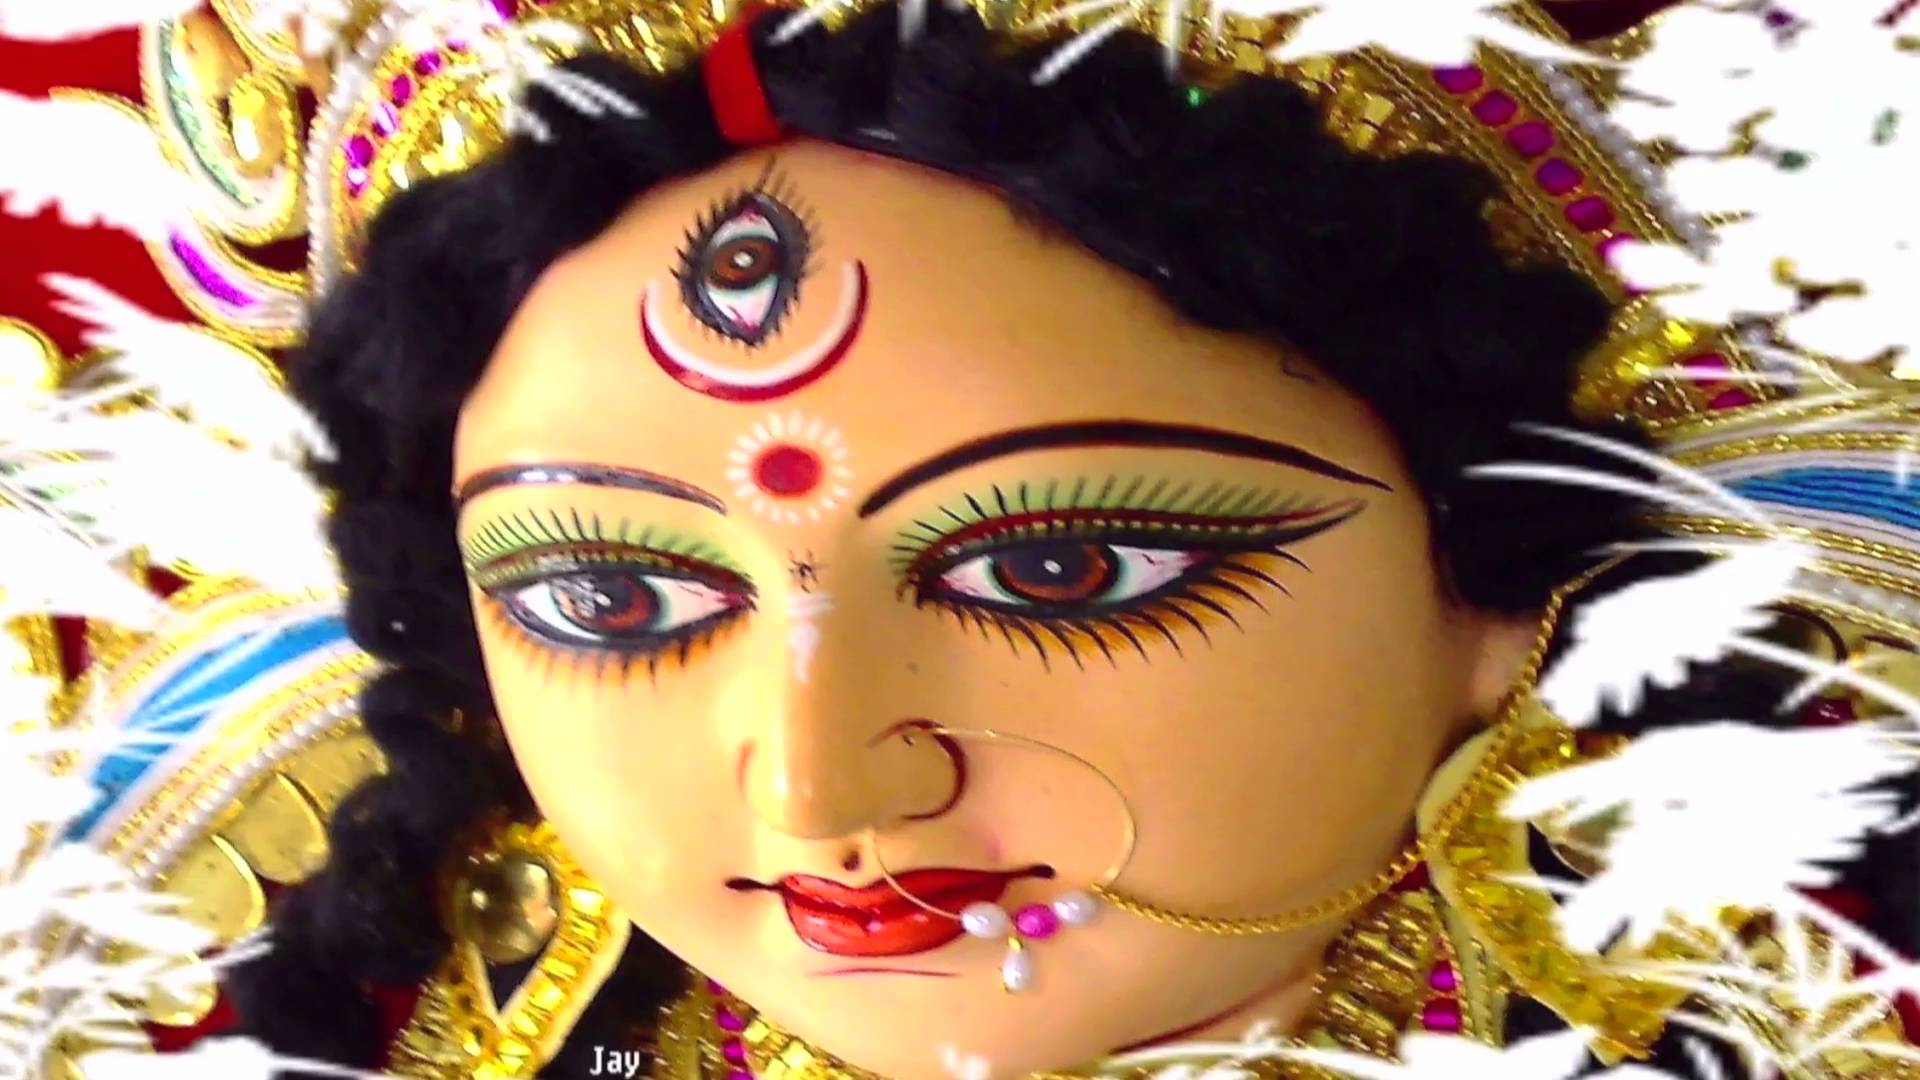 Maa Durga Face Hd Image Download | Goddess Maa Durga